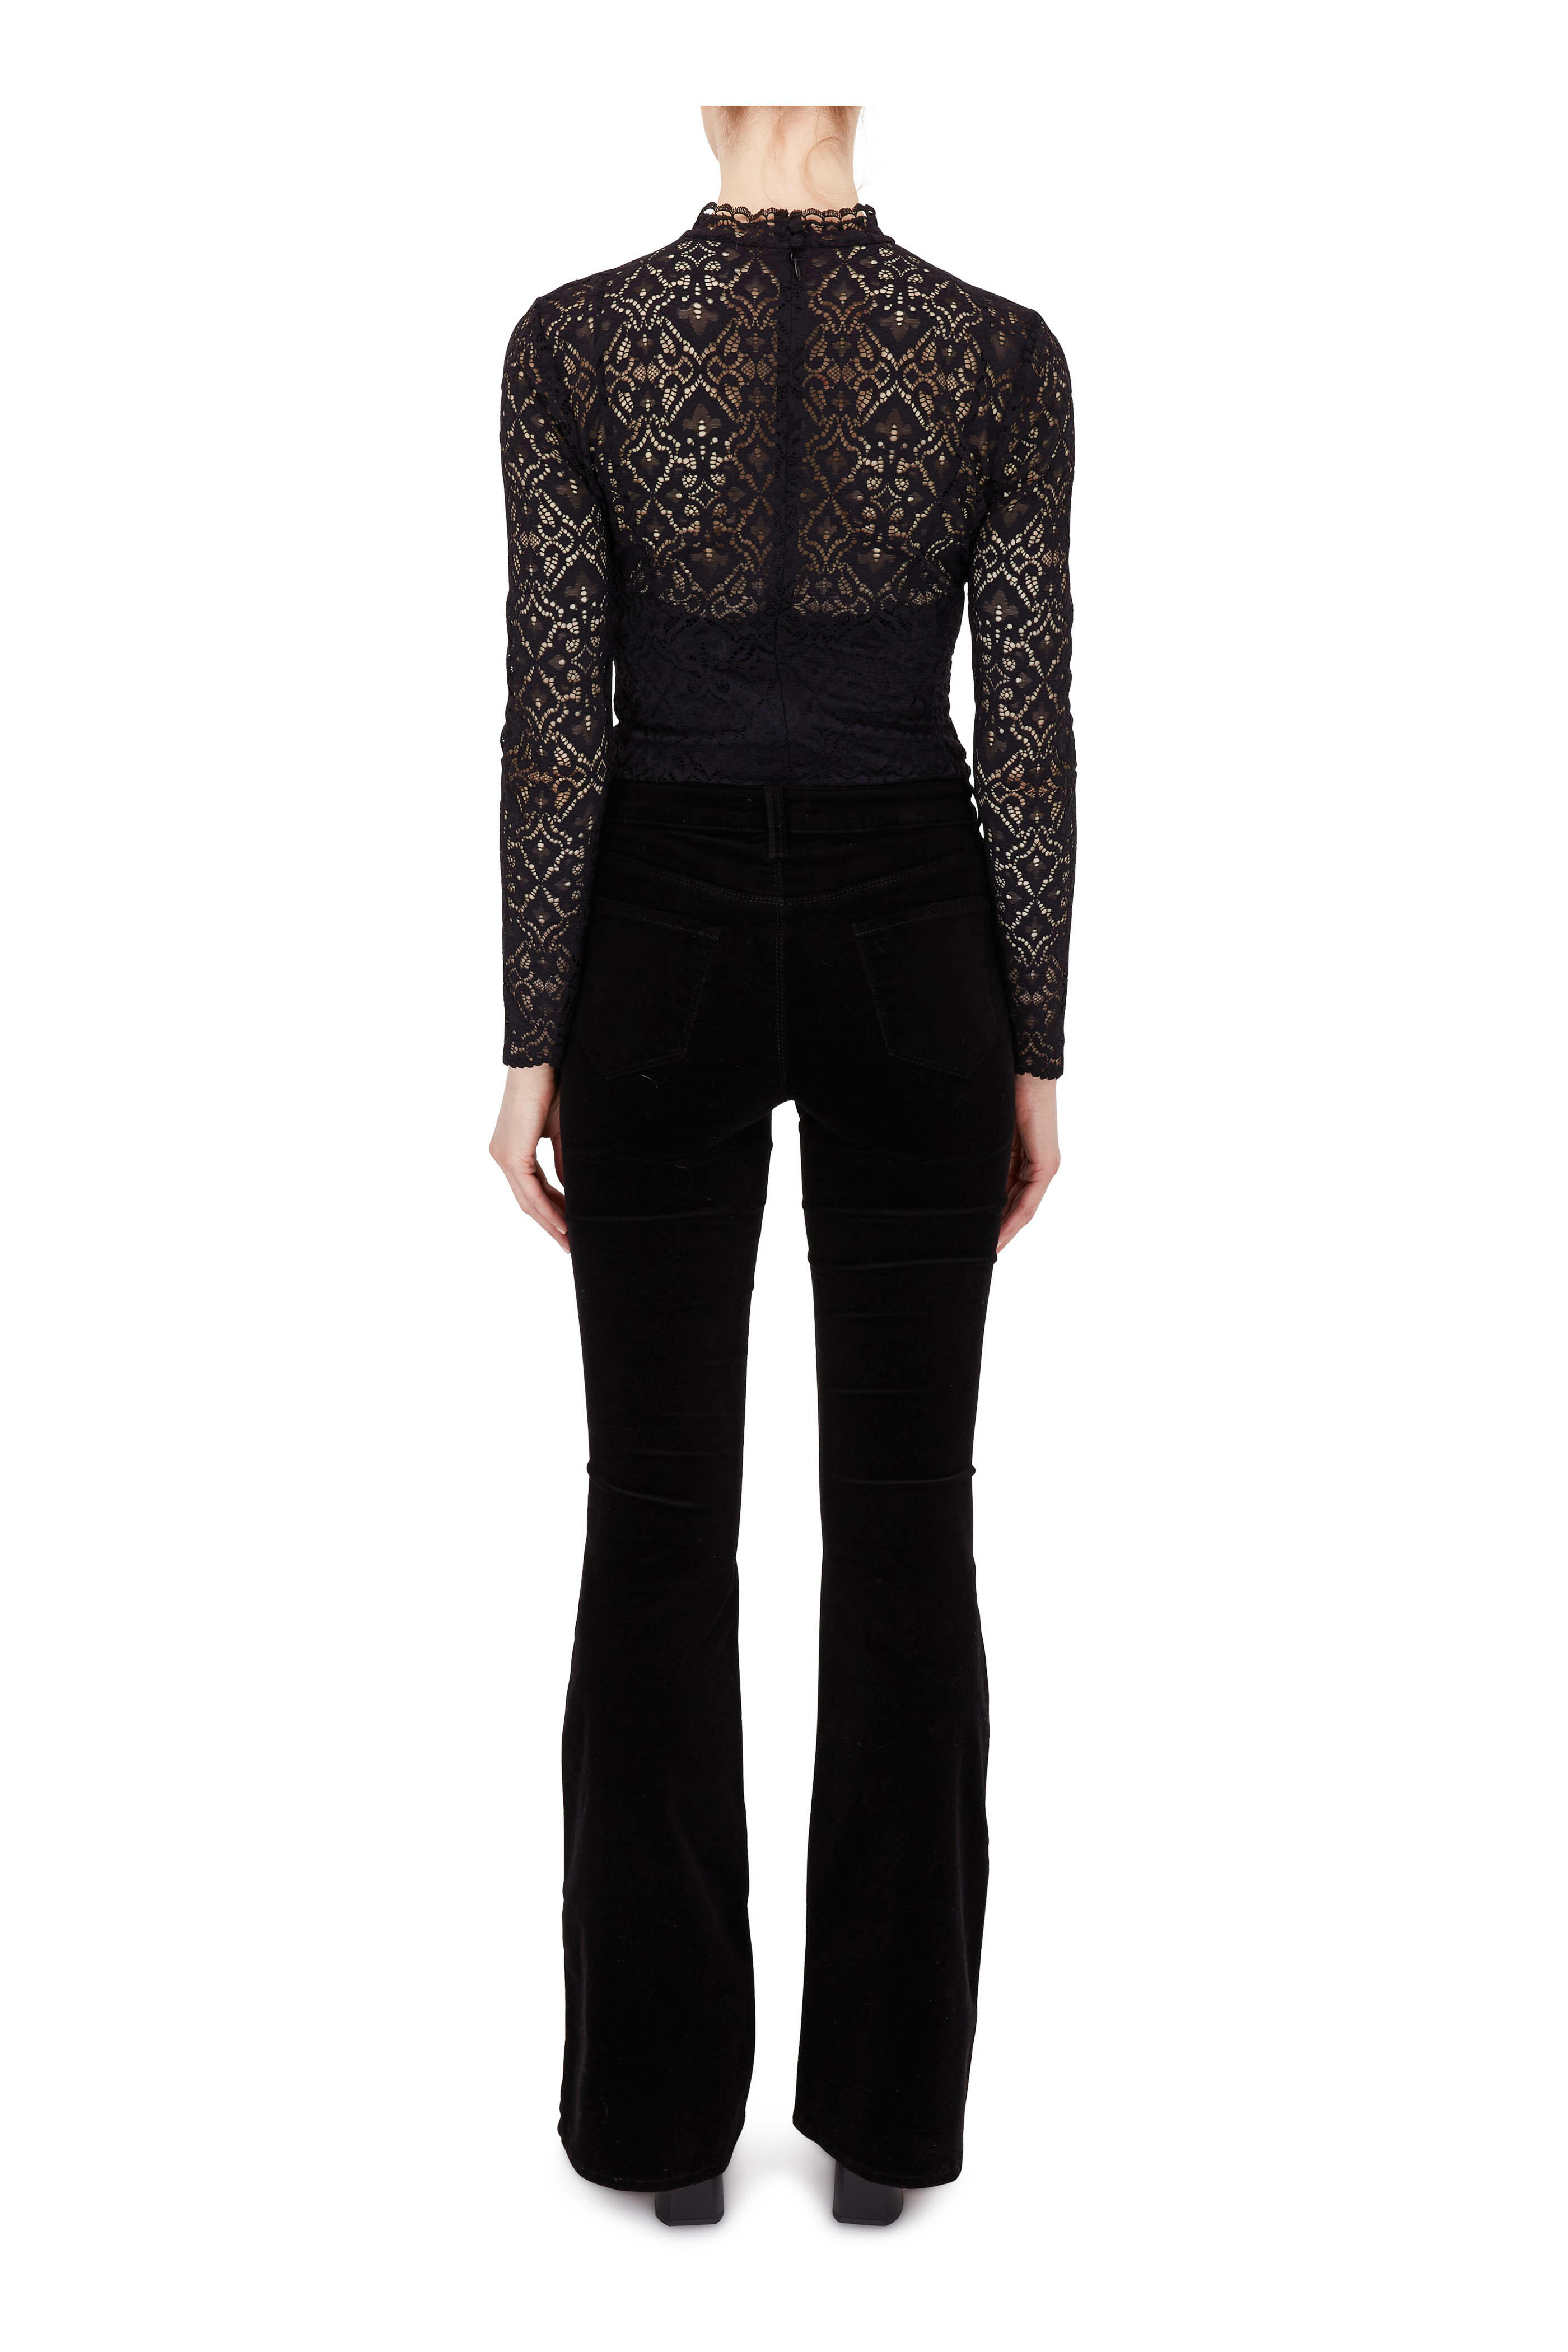 black lace bodysuit outfit shorts #bodysuit #outfit #summer #high #waist  #bodysuitoutfitsummerhi…